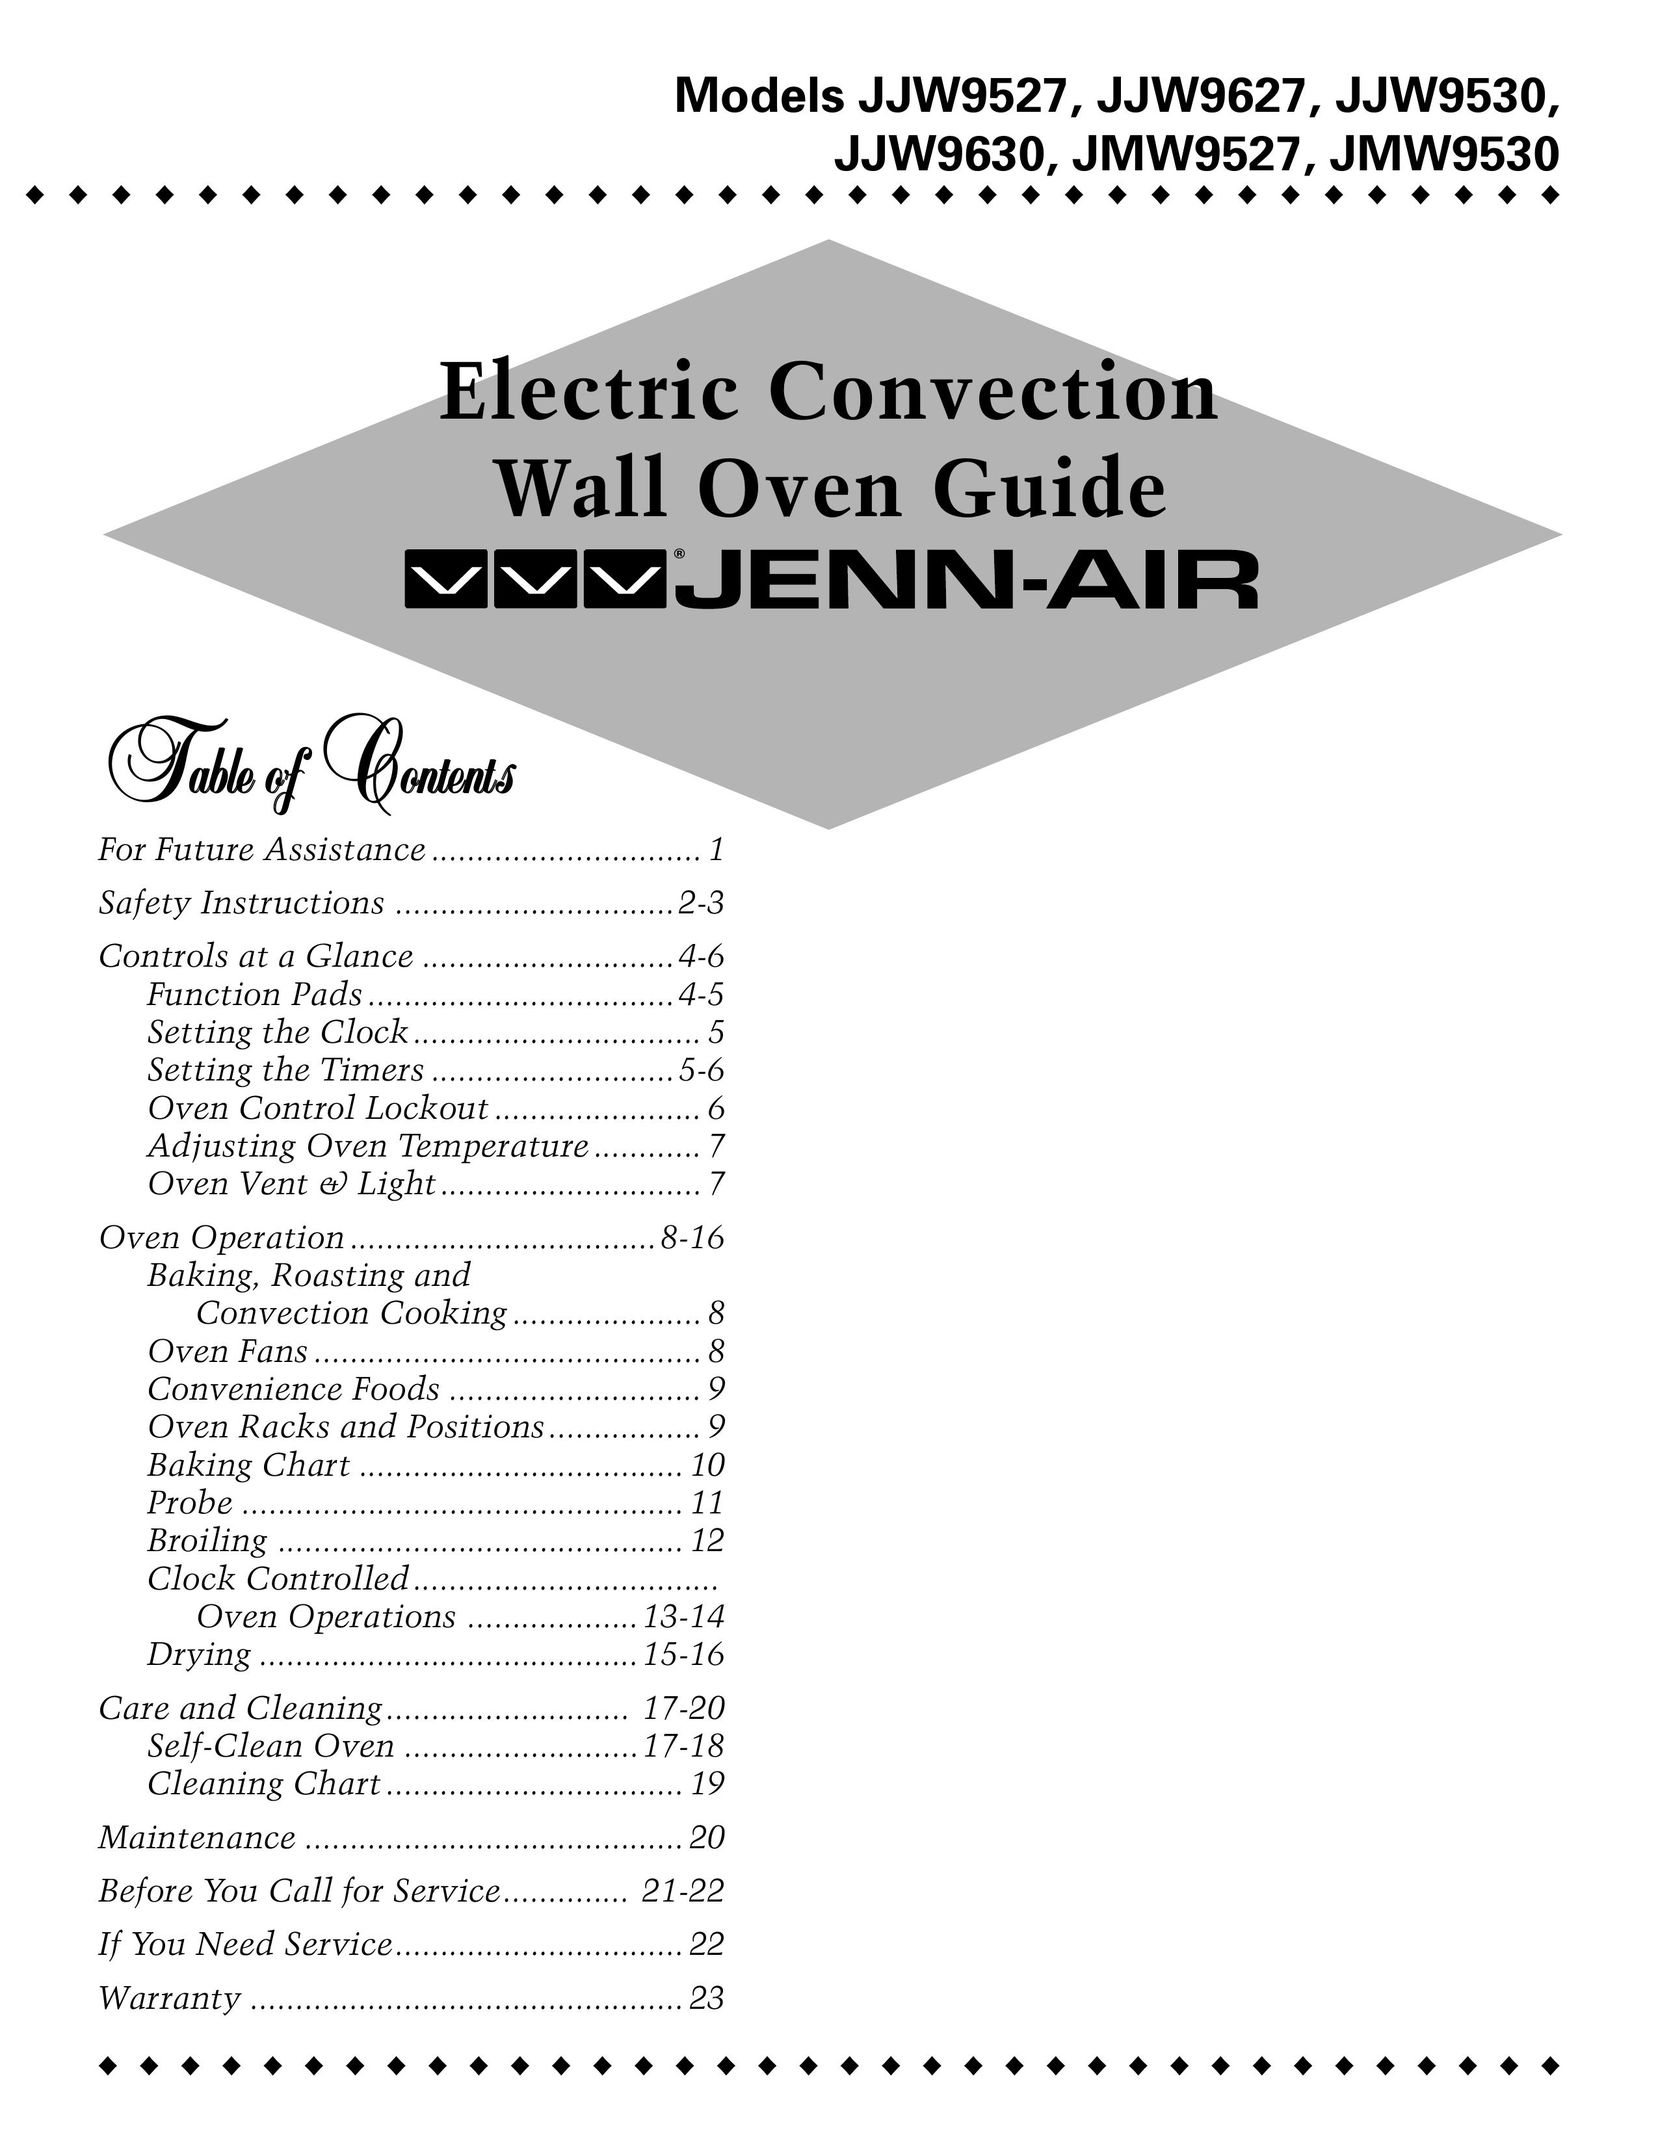 Jenn-Air JJW9530 Convection Oven User Manual